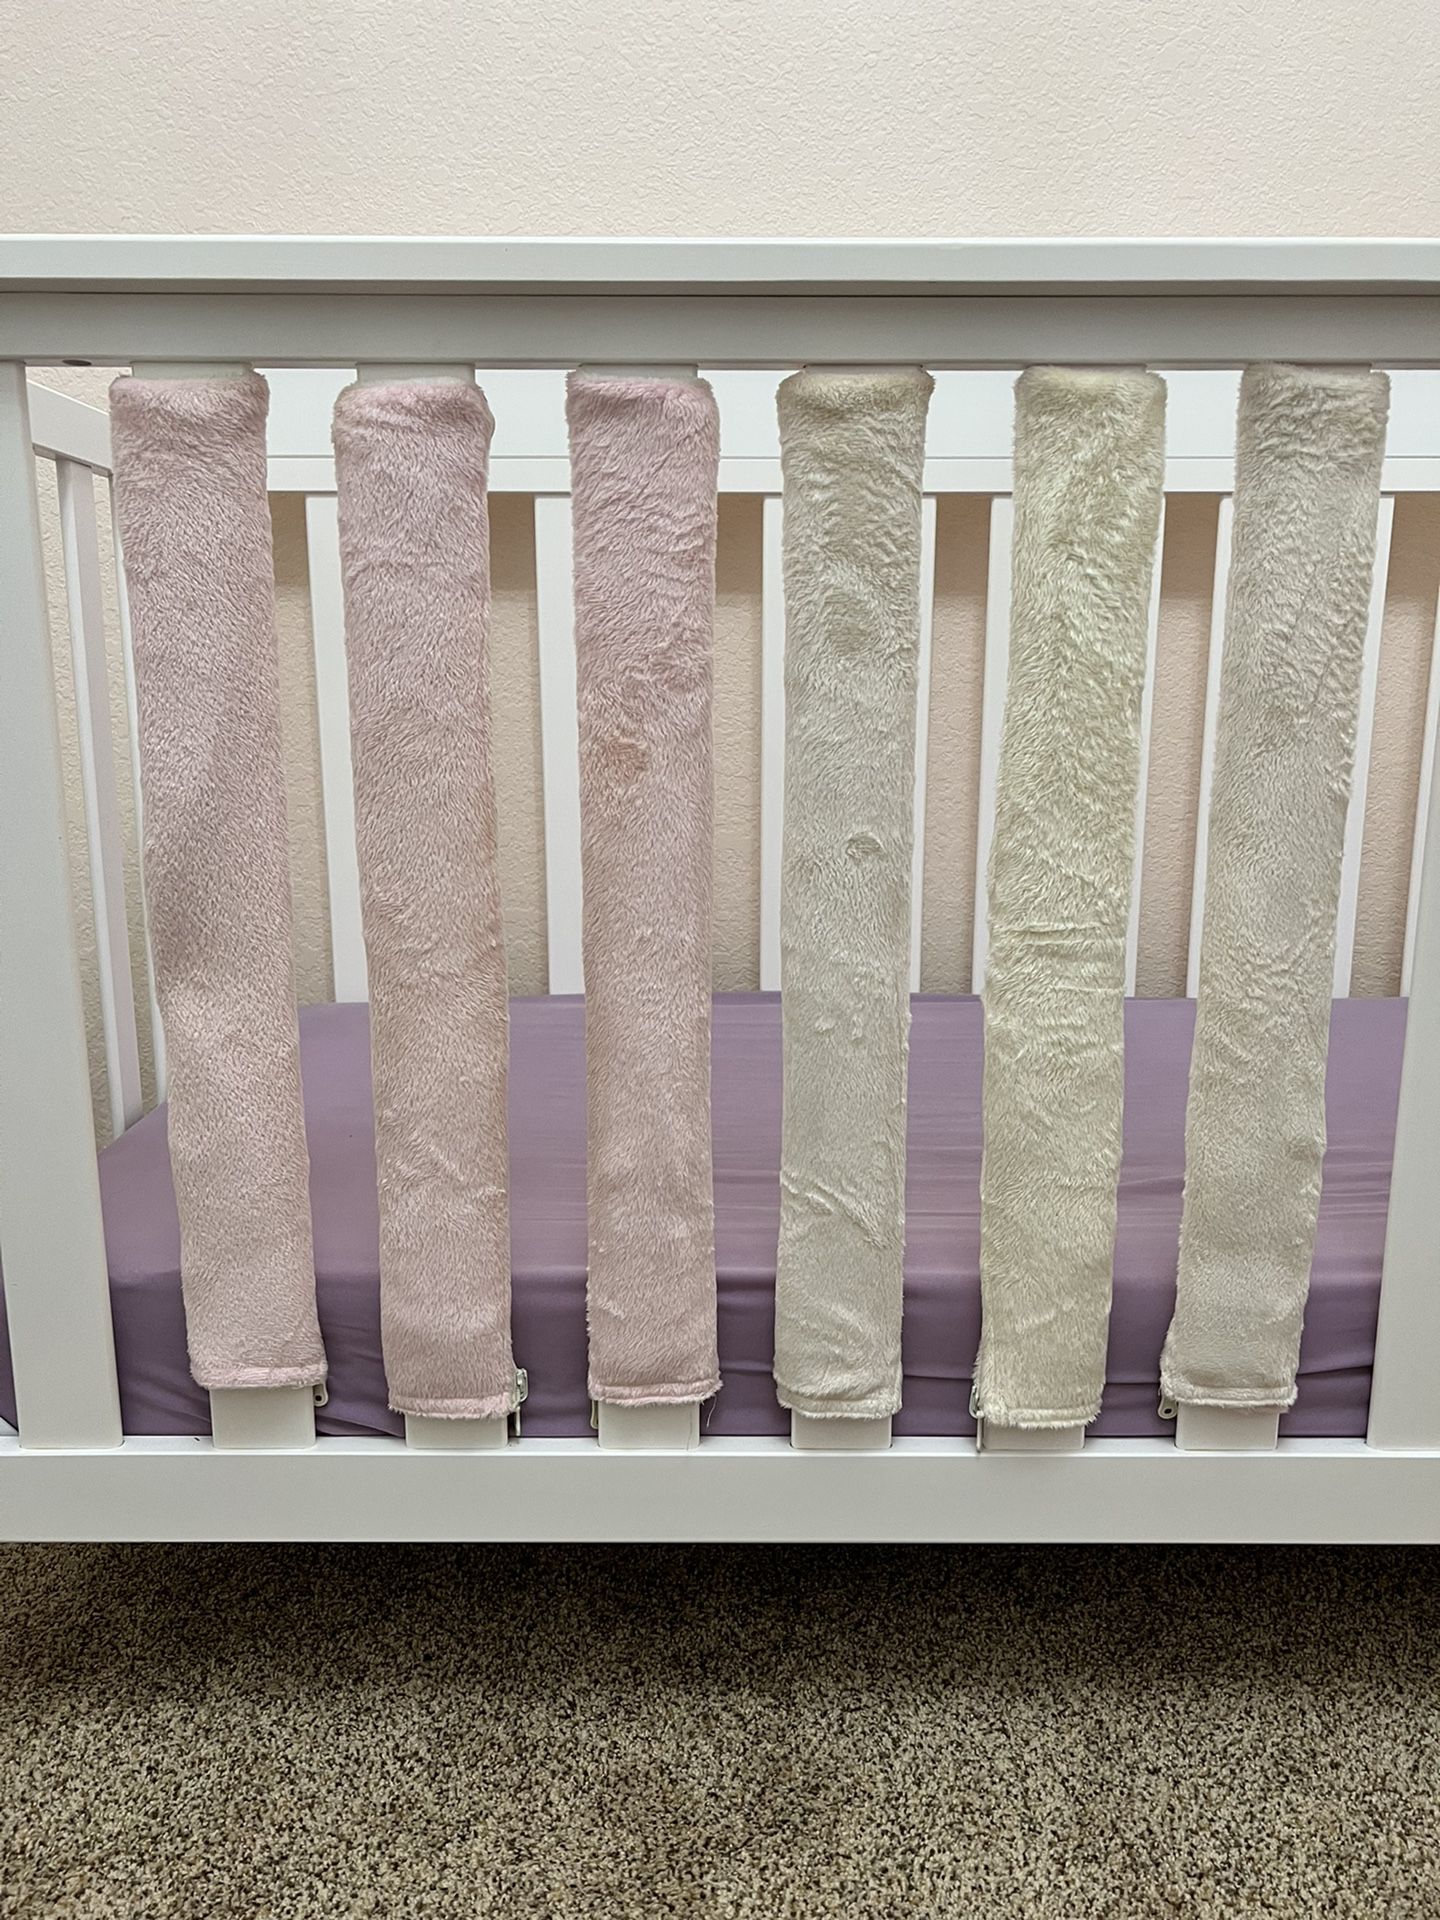 Vertical Wonder Crib Bumpers Baby Safety Pink White Nursery